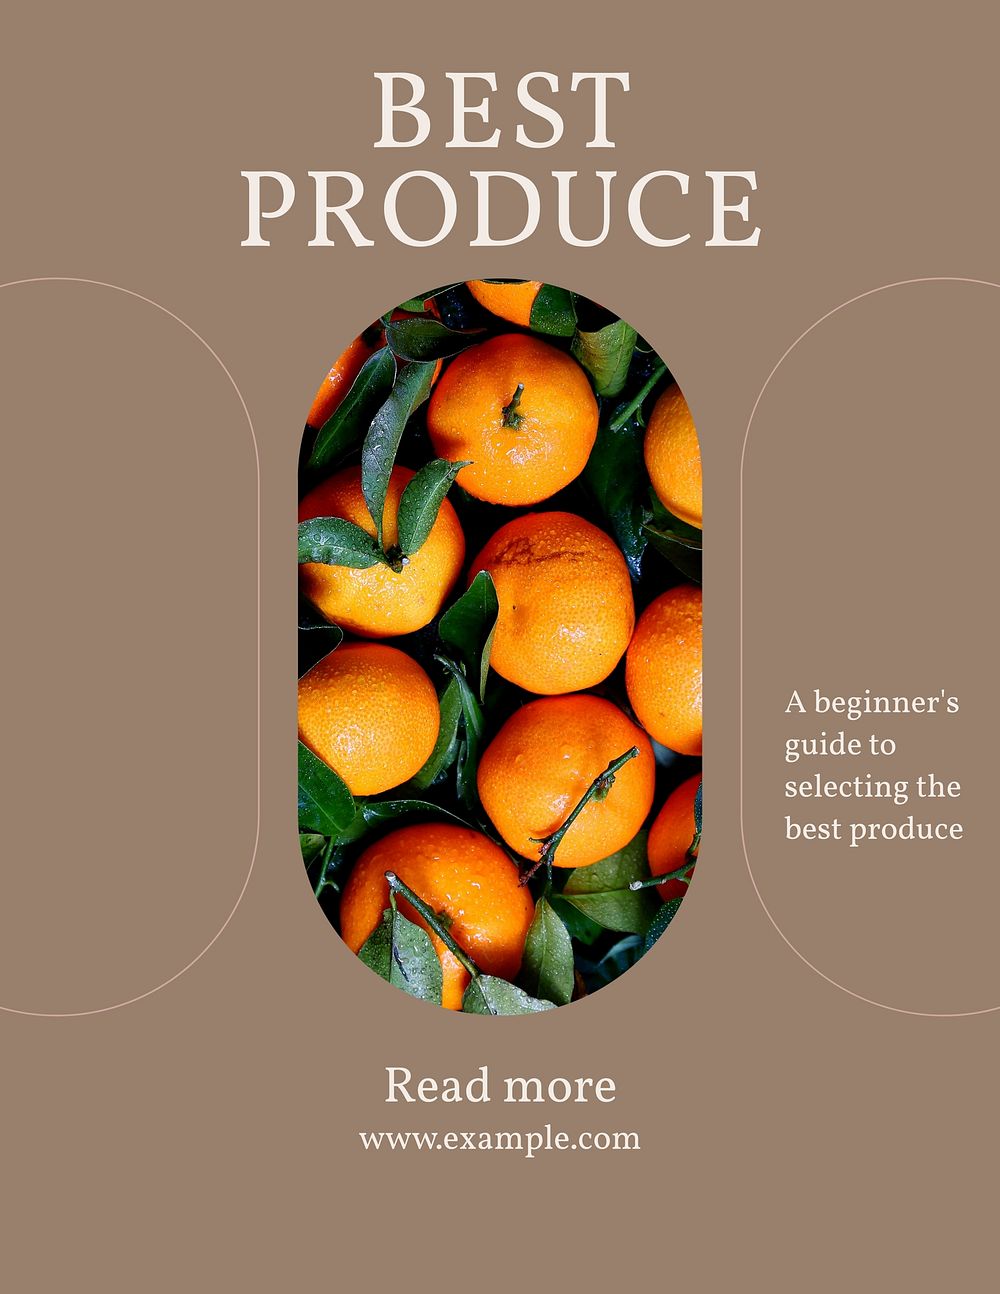 Best produce flyer template